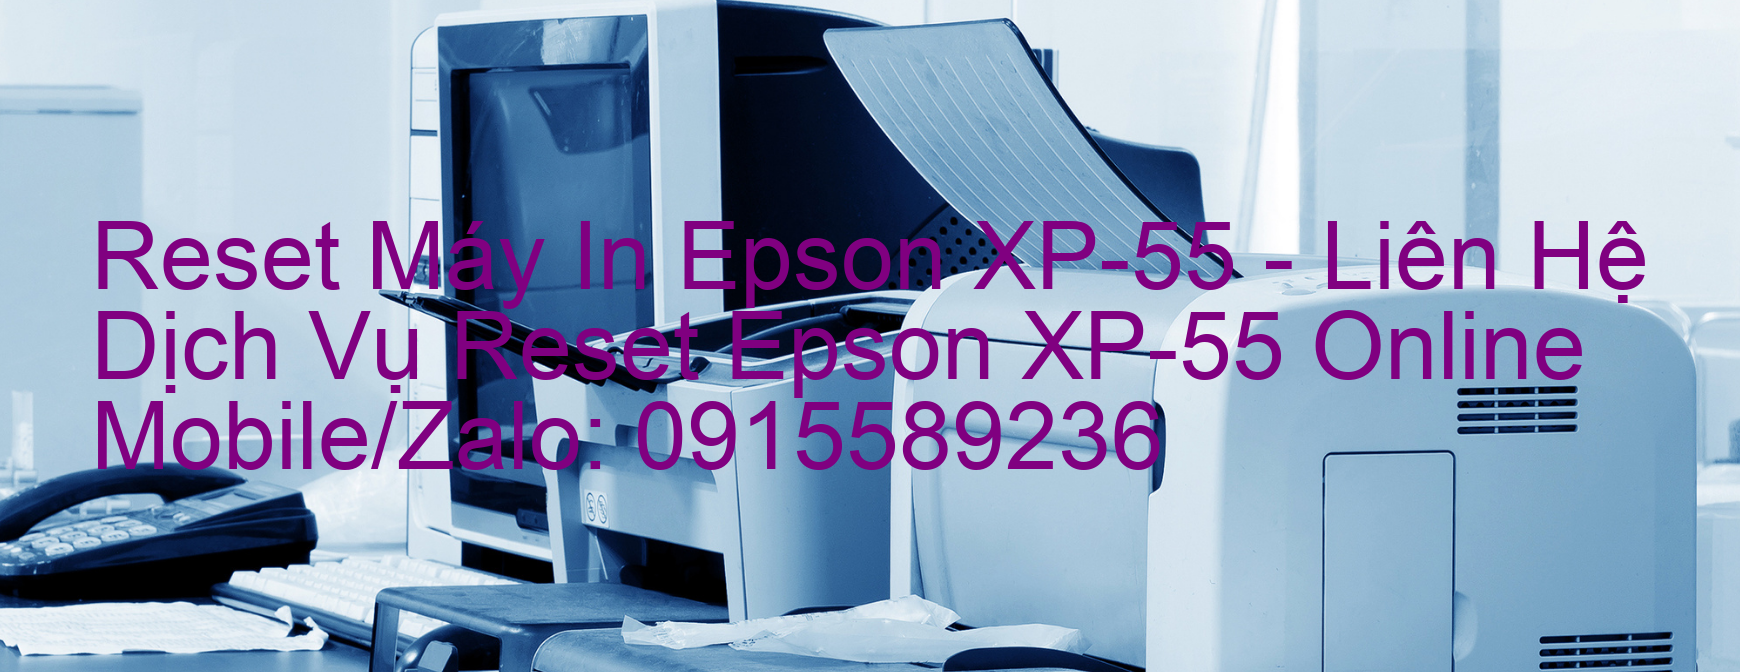 Reset Máy In Epson XP-55 Online